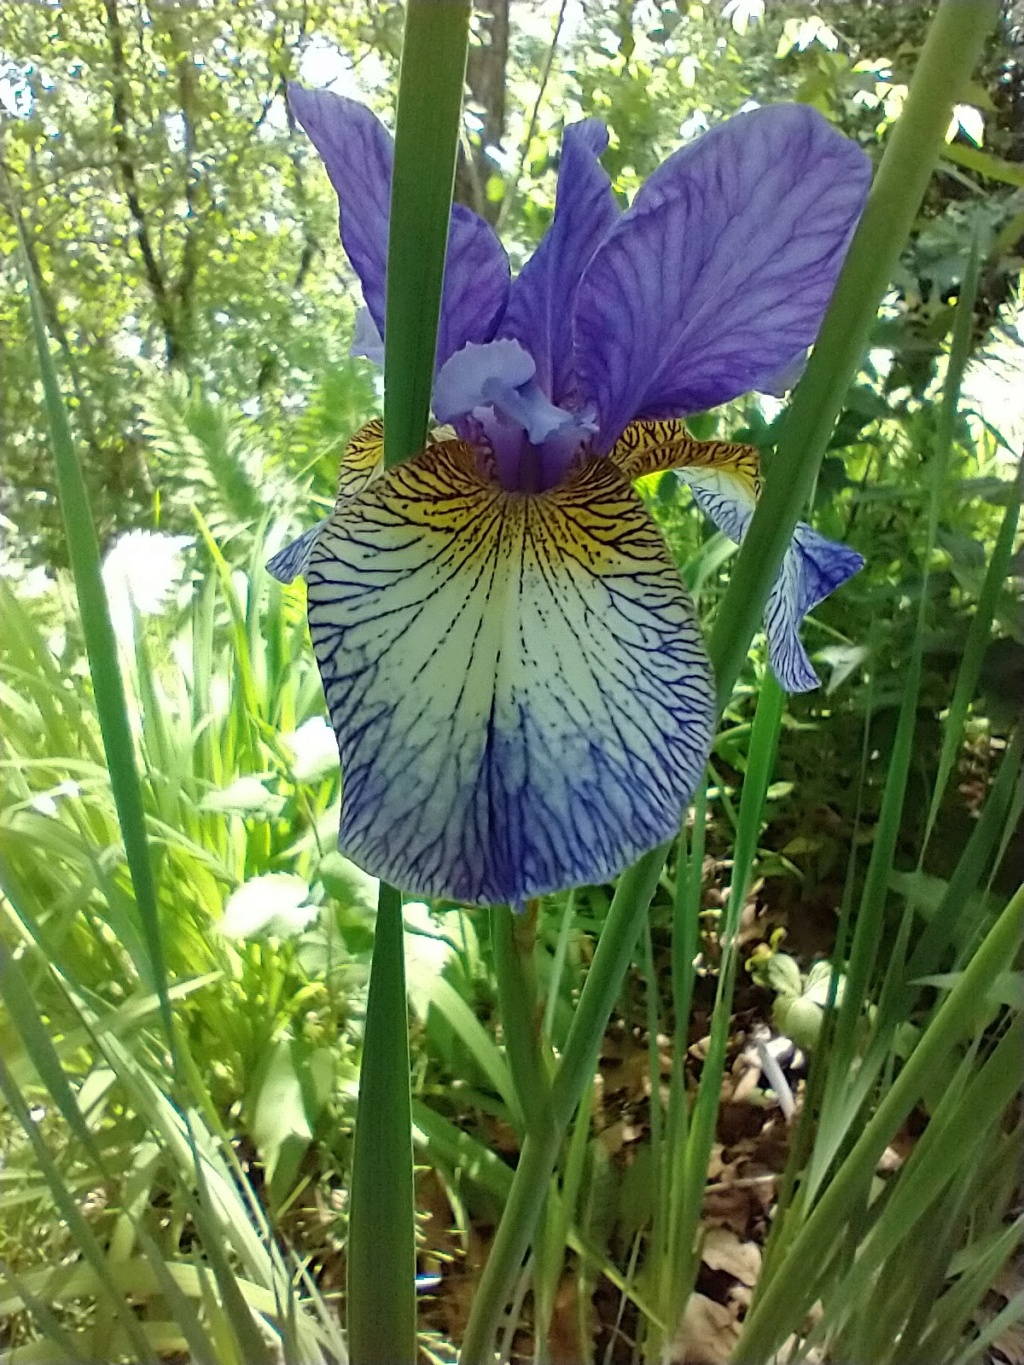 Iris de Sibérie Iris sibirica Pennywhistle